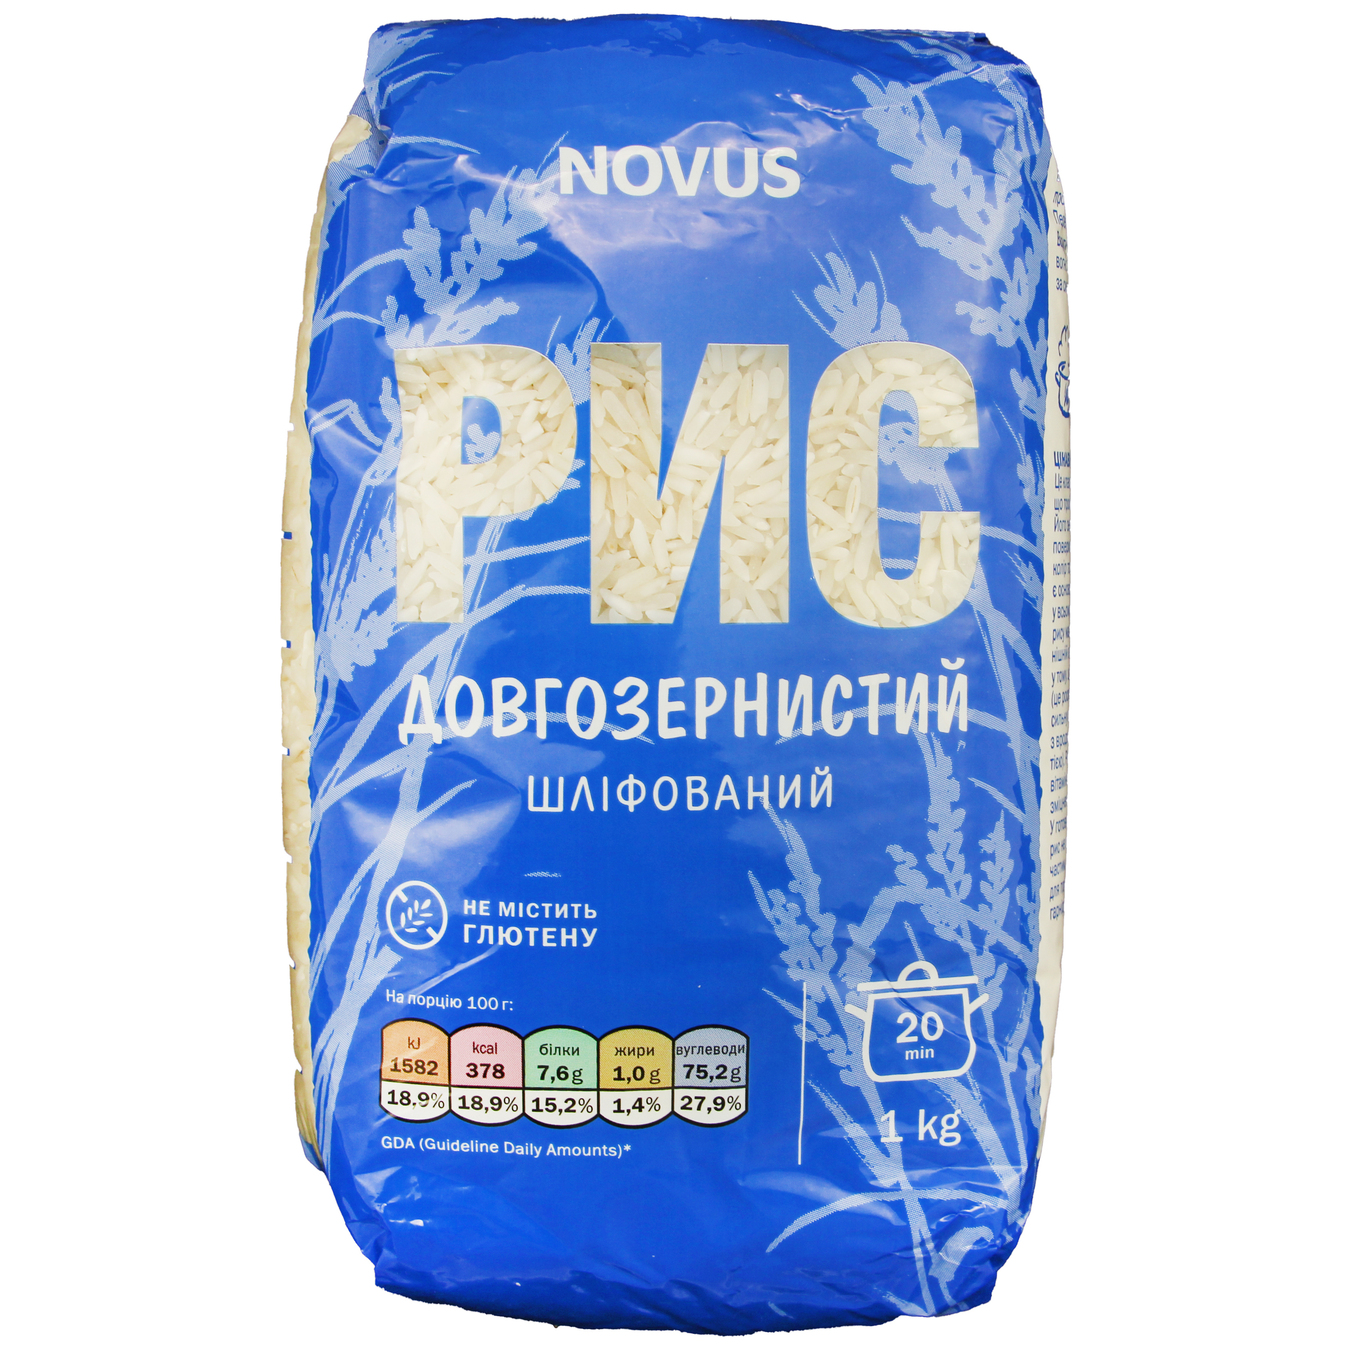 Novus Polished Long Grain Rice 1kg